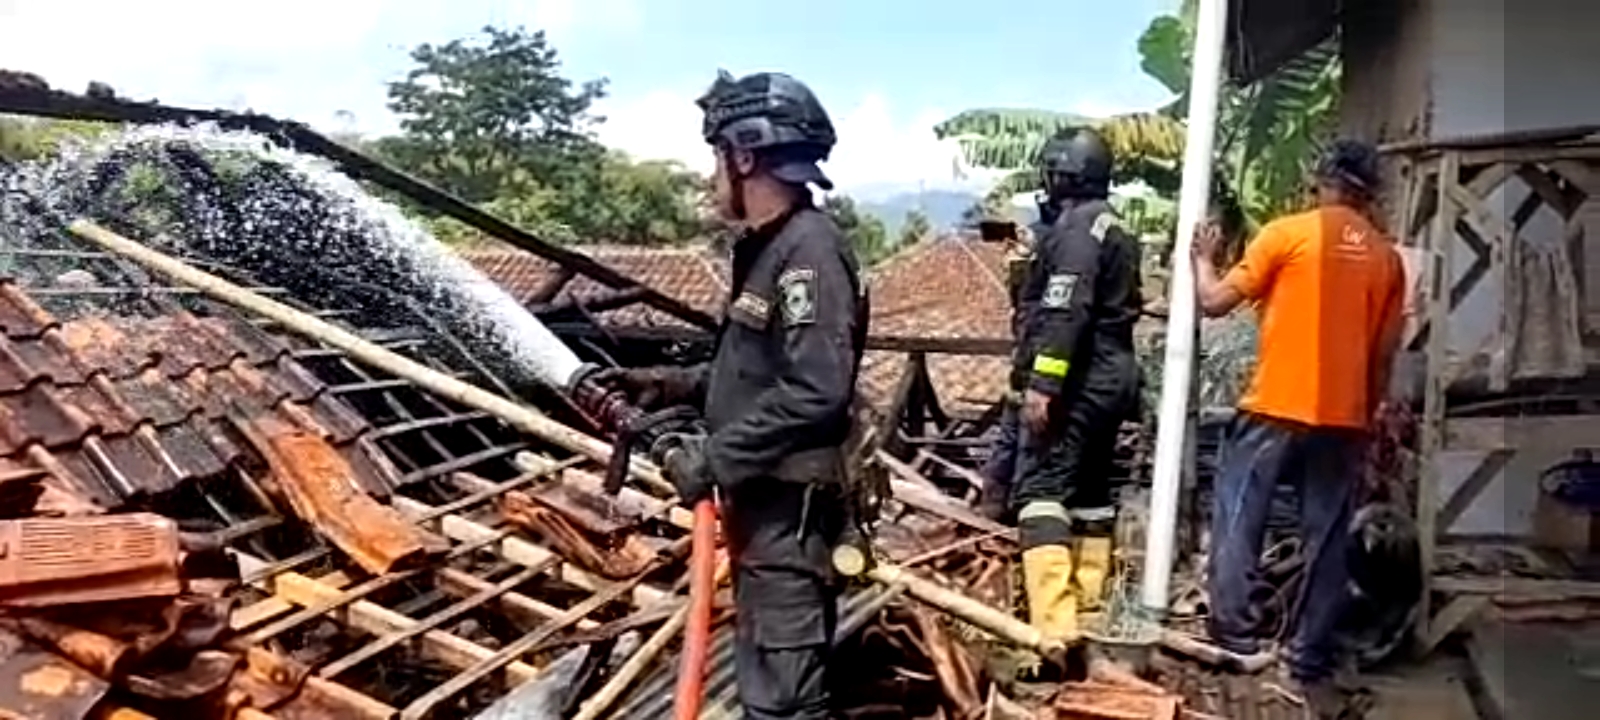 Rumah Terbakar Gara-gara Tungku, Kerugian Mencapai Rp 50 Juta